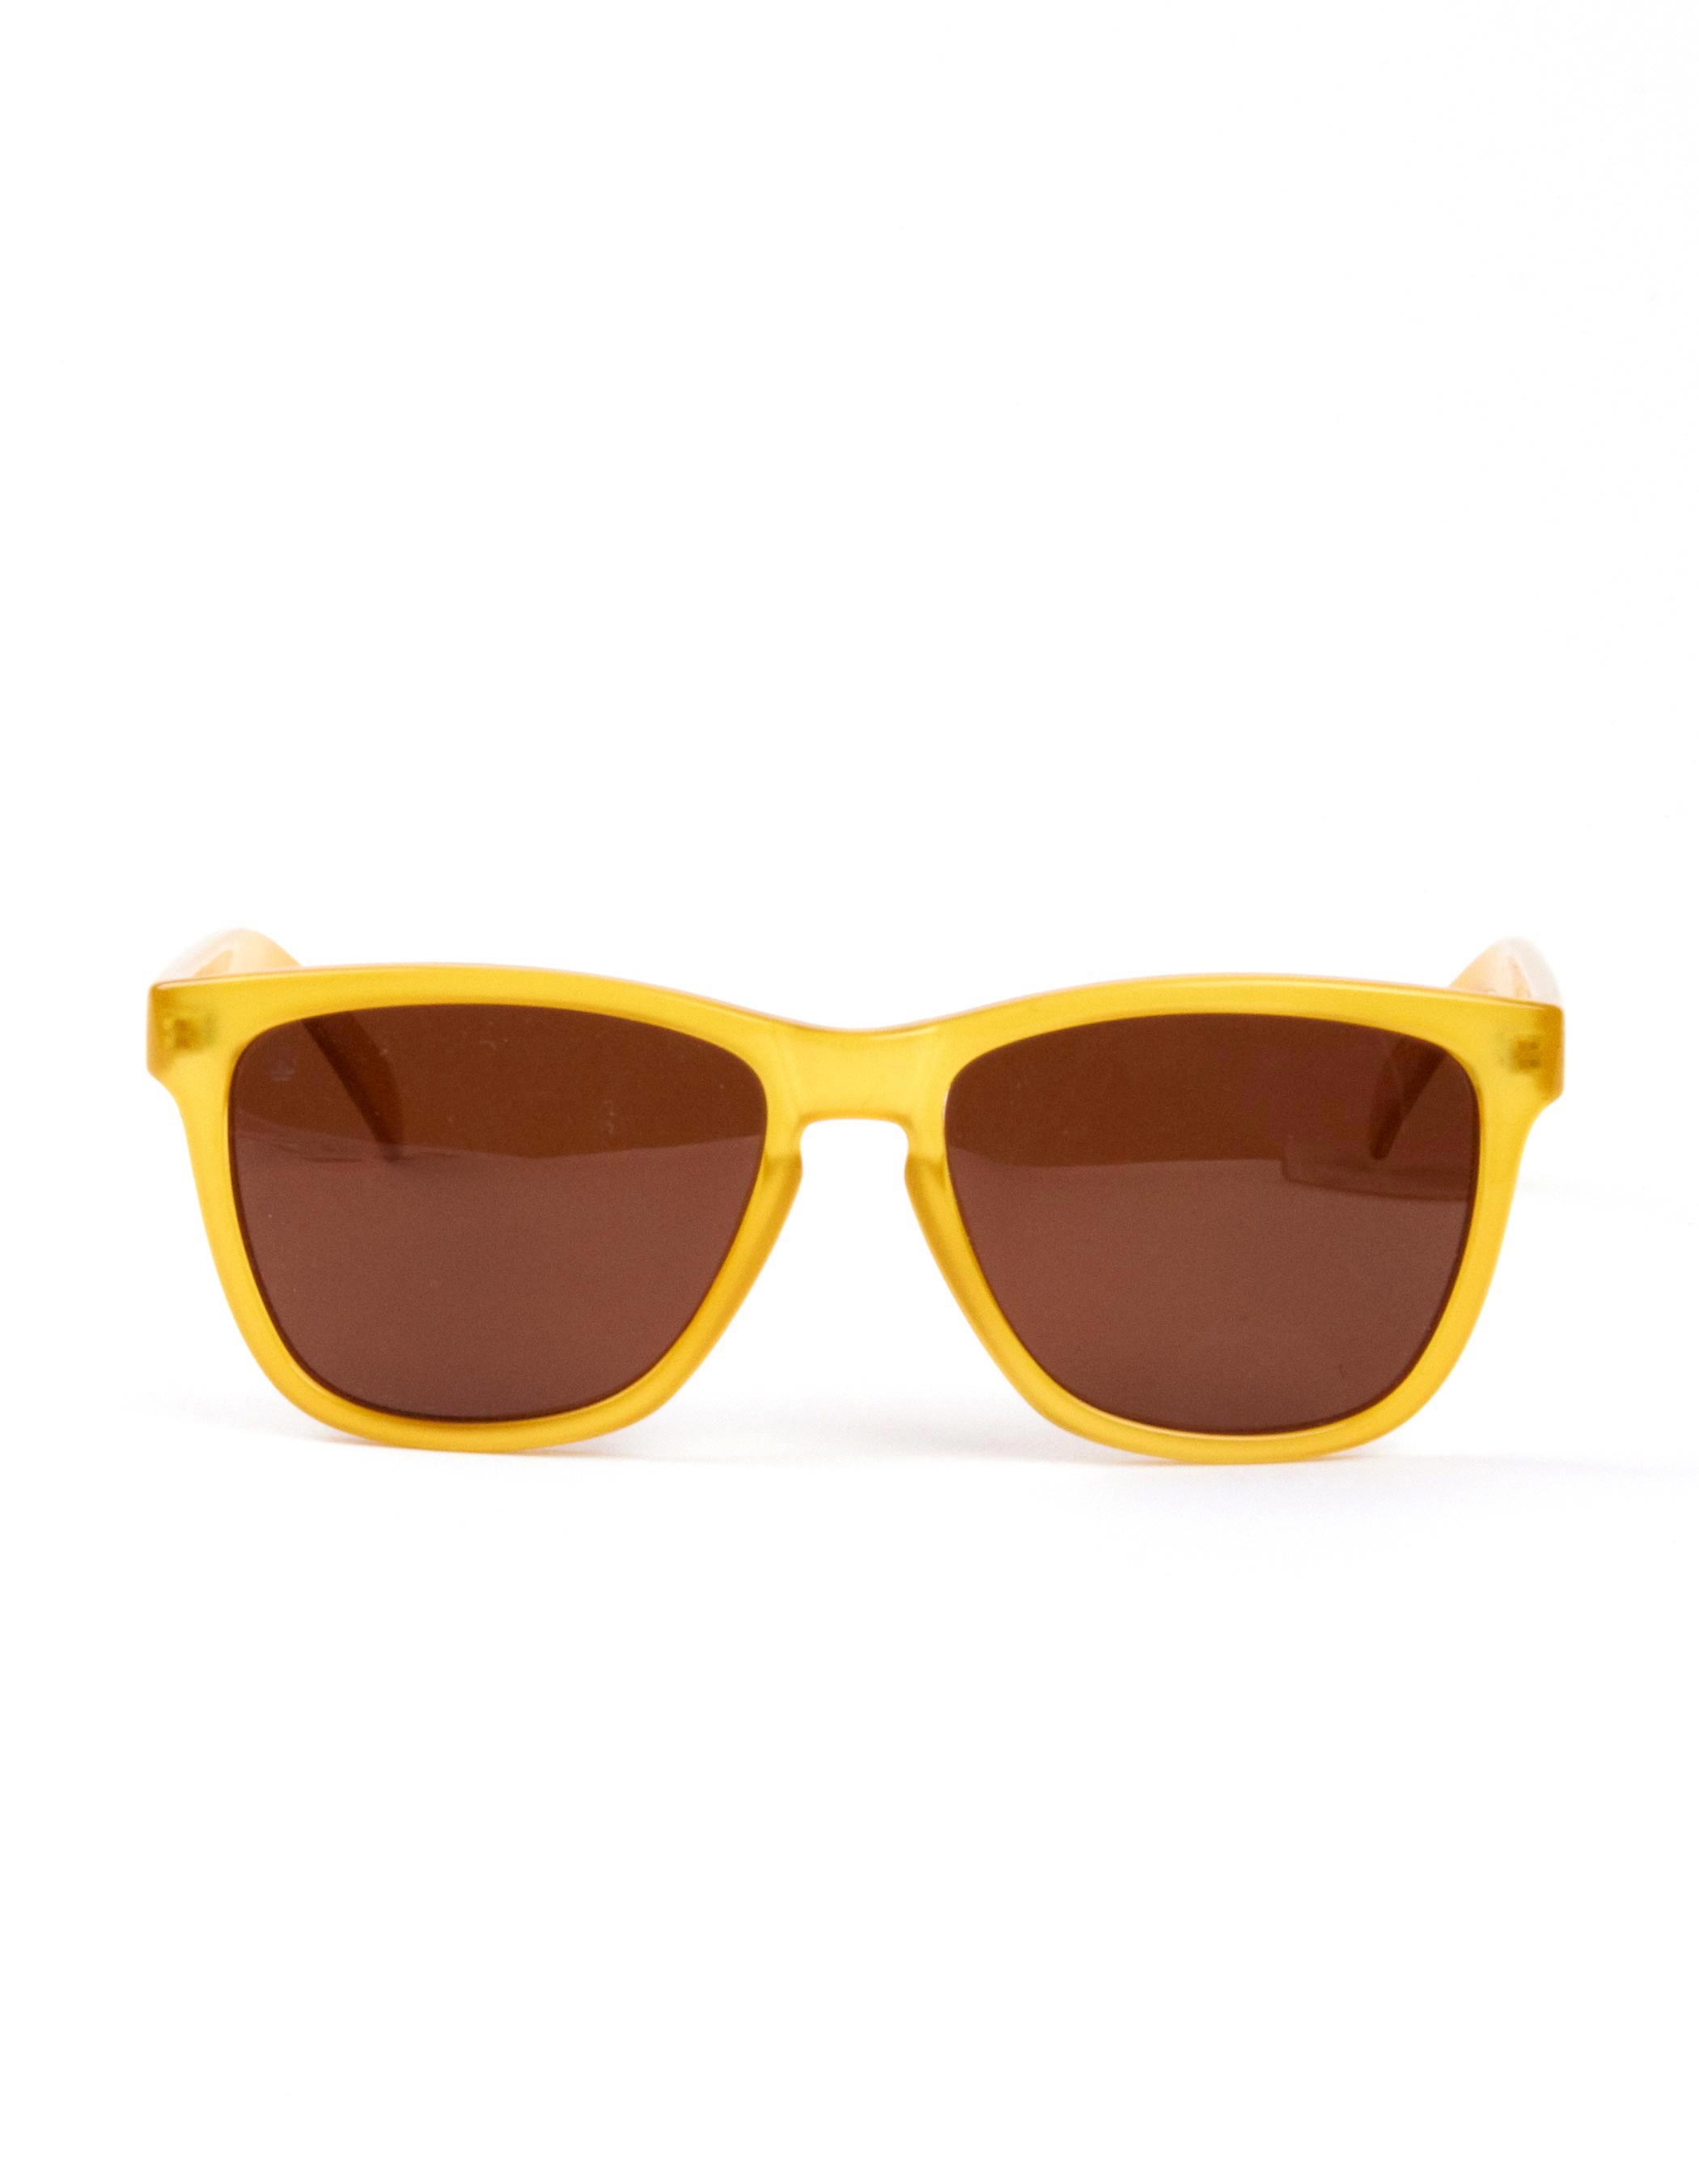 Sunglasses retro yellow 1